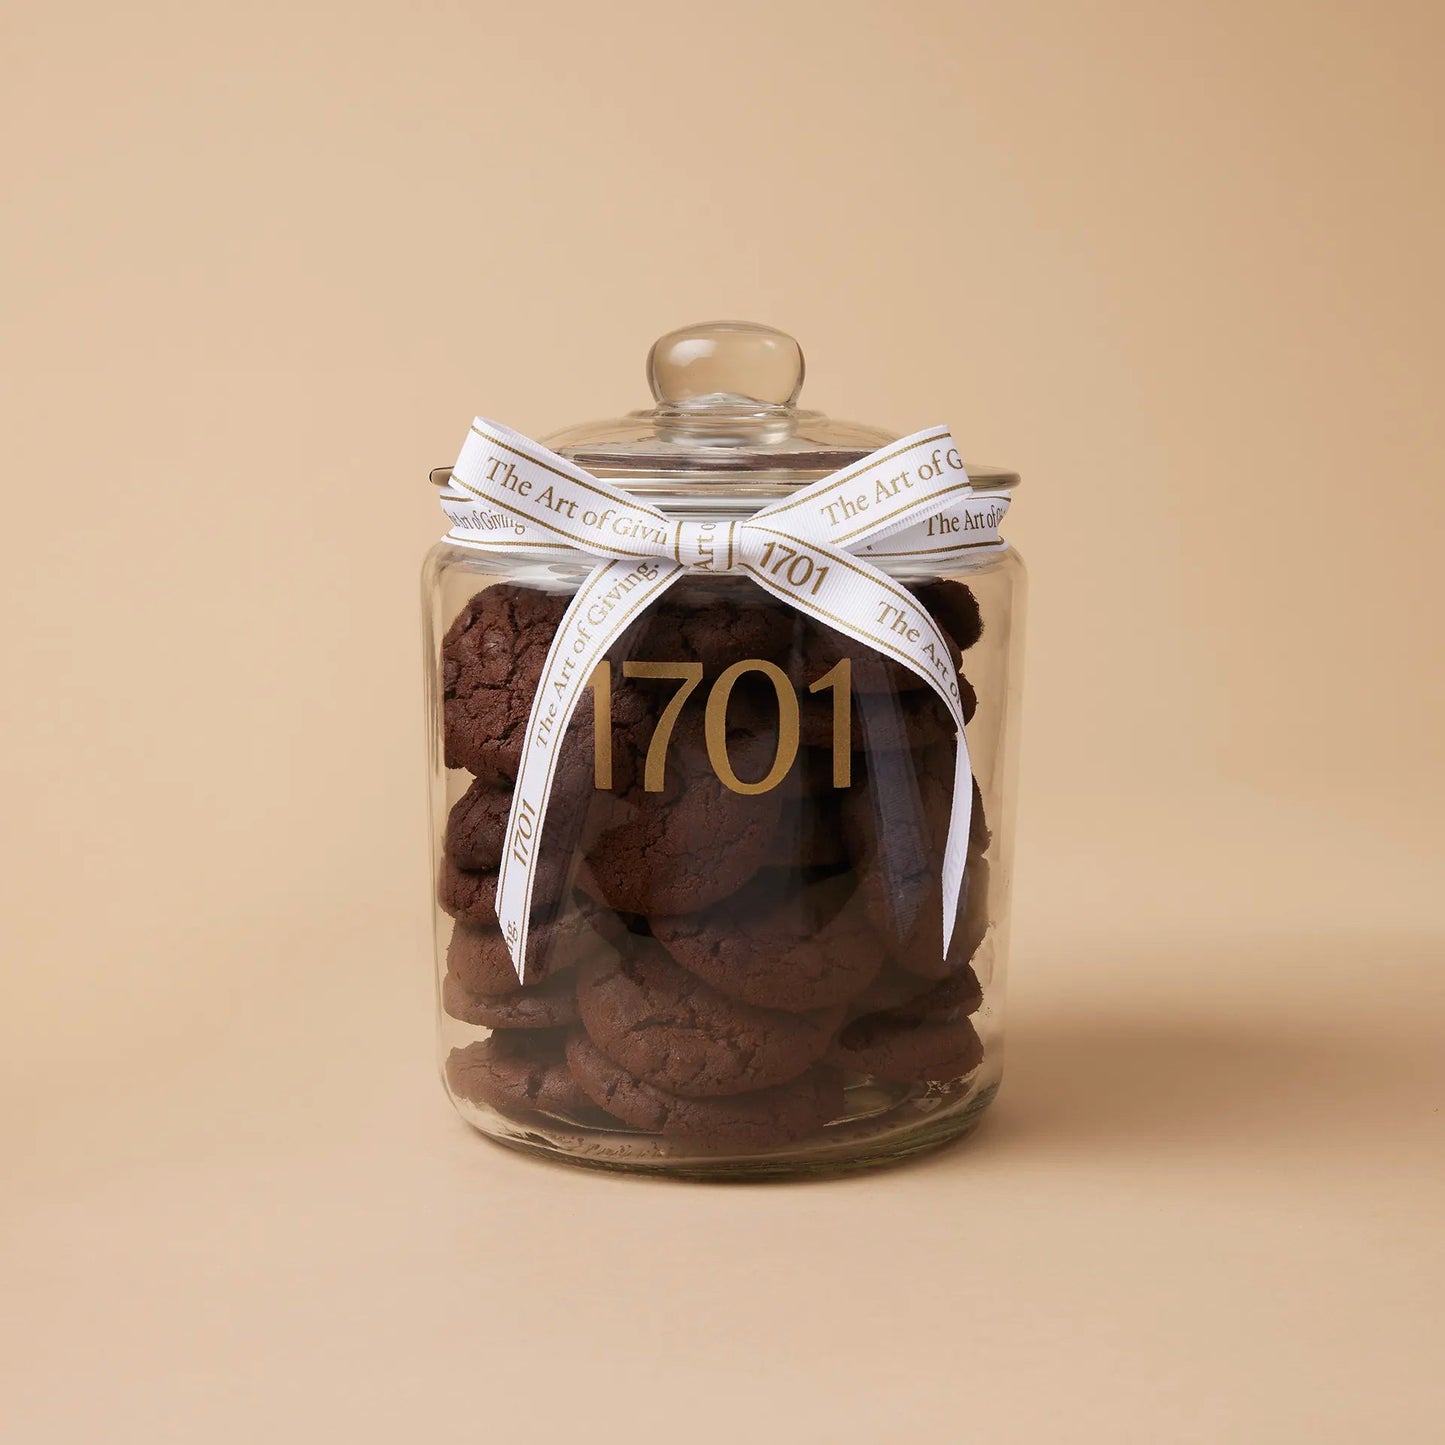 Belgian Double Chocolate Chip Biscuit Jar (1.4kg) - 1701